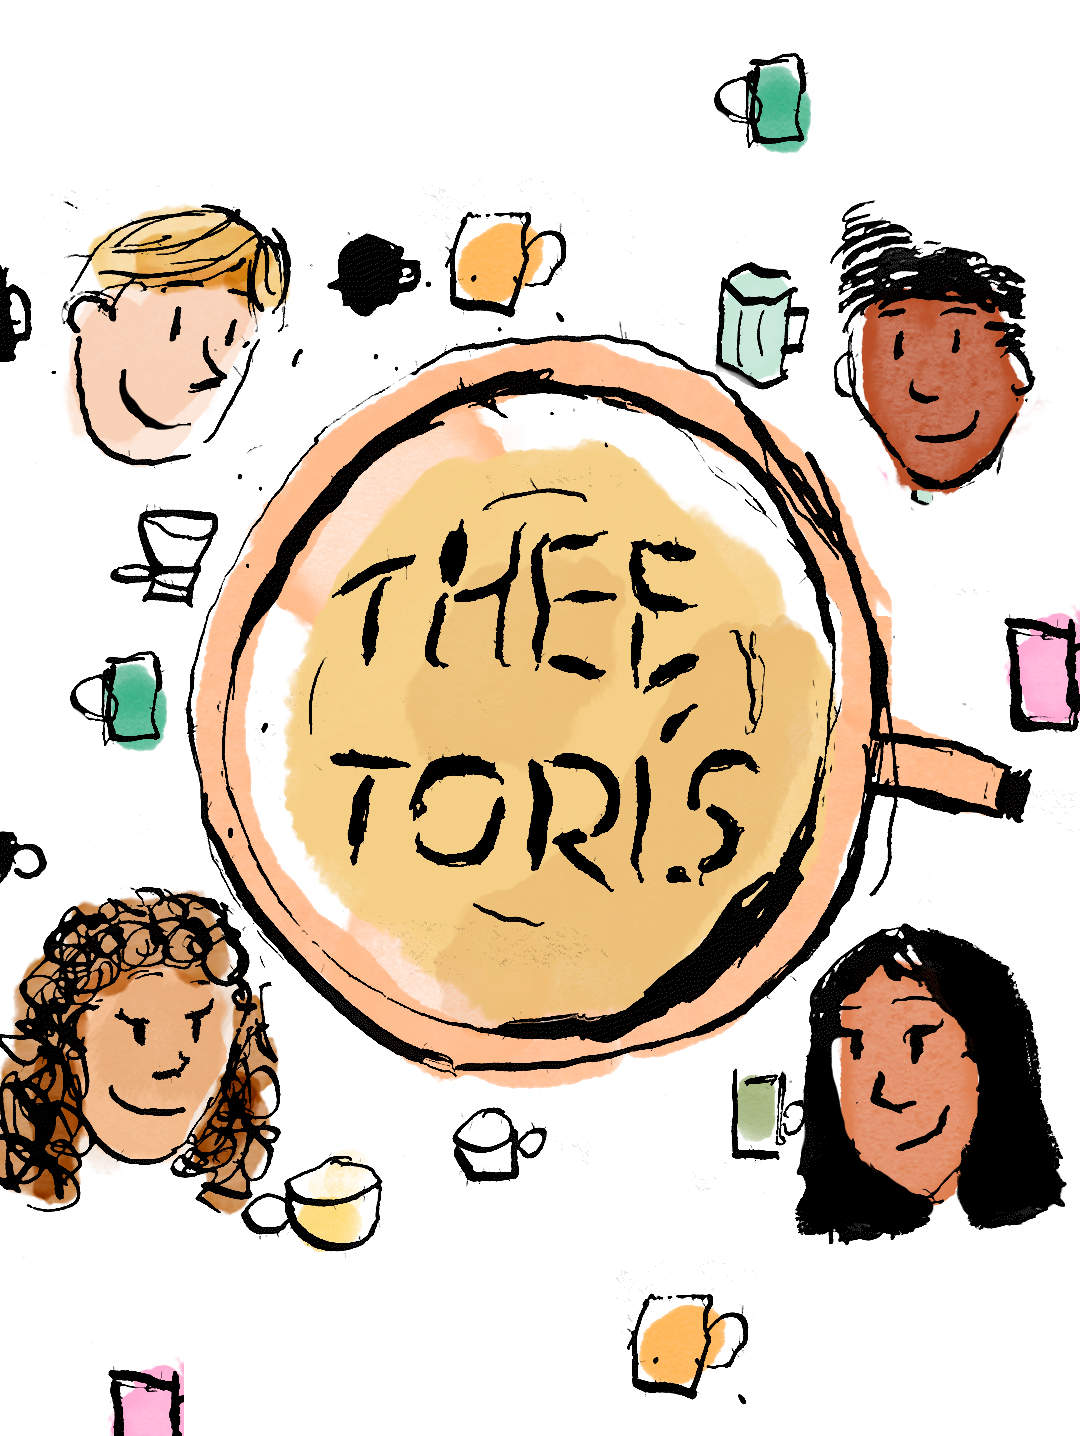 Thee toris